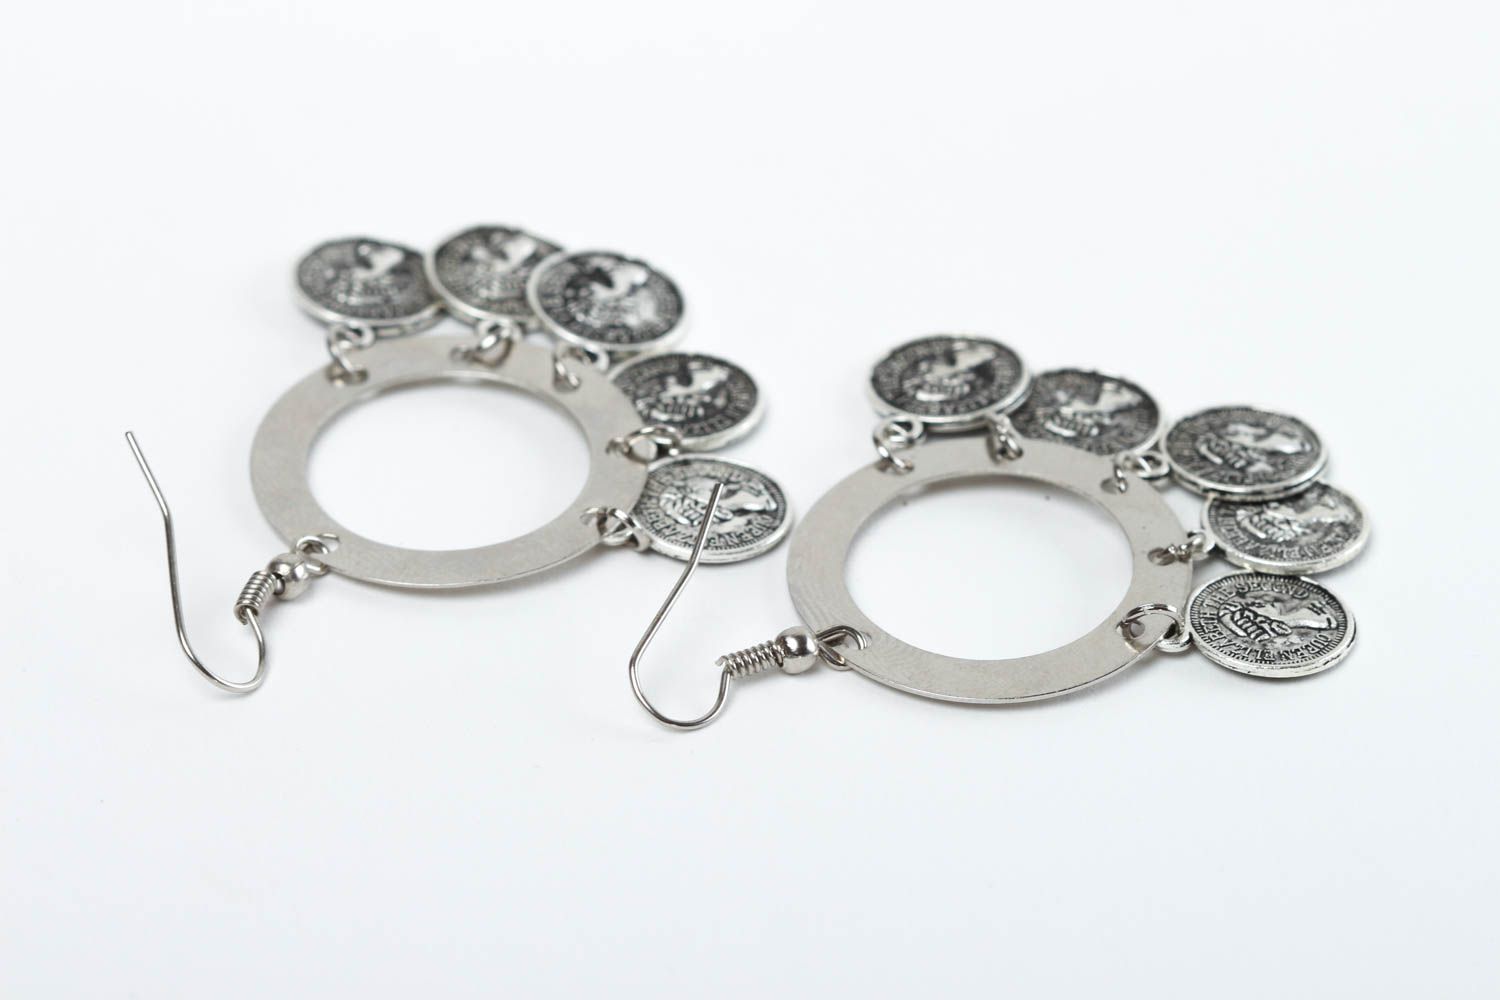 Handmade earrings designer jewelry unusual accessory gift ideas earrings for her photo 4